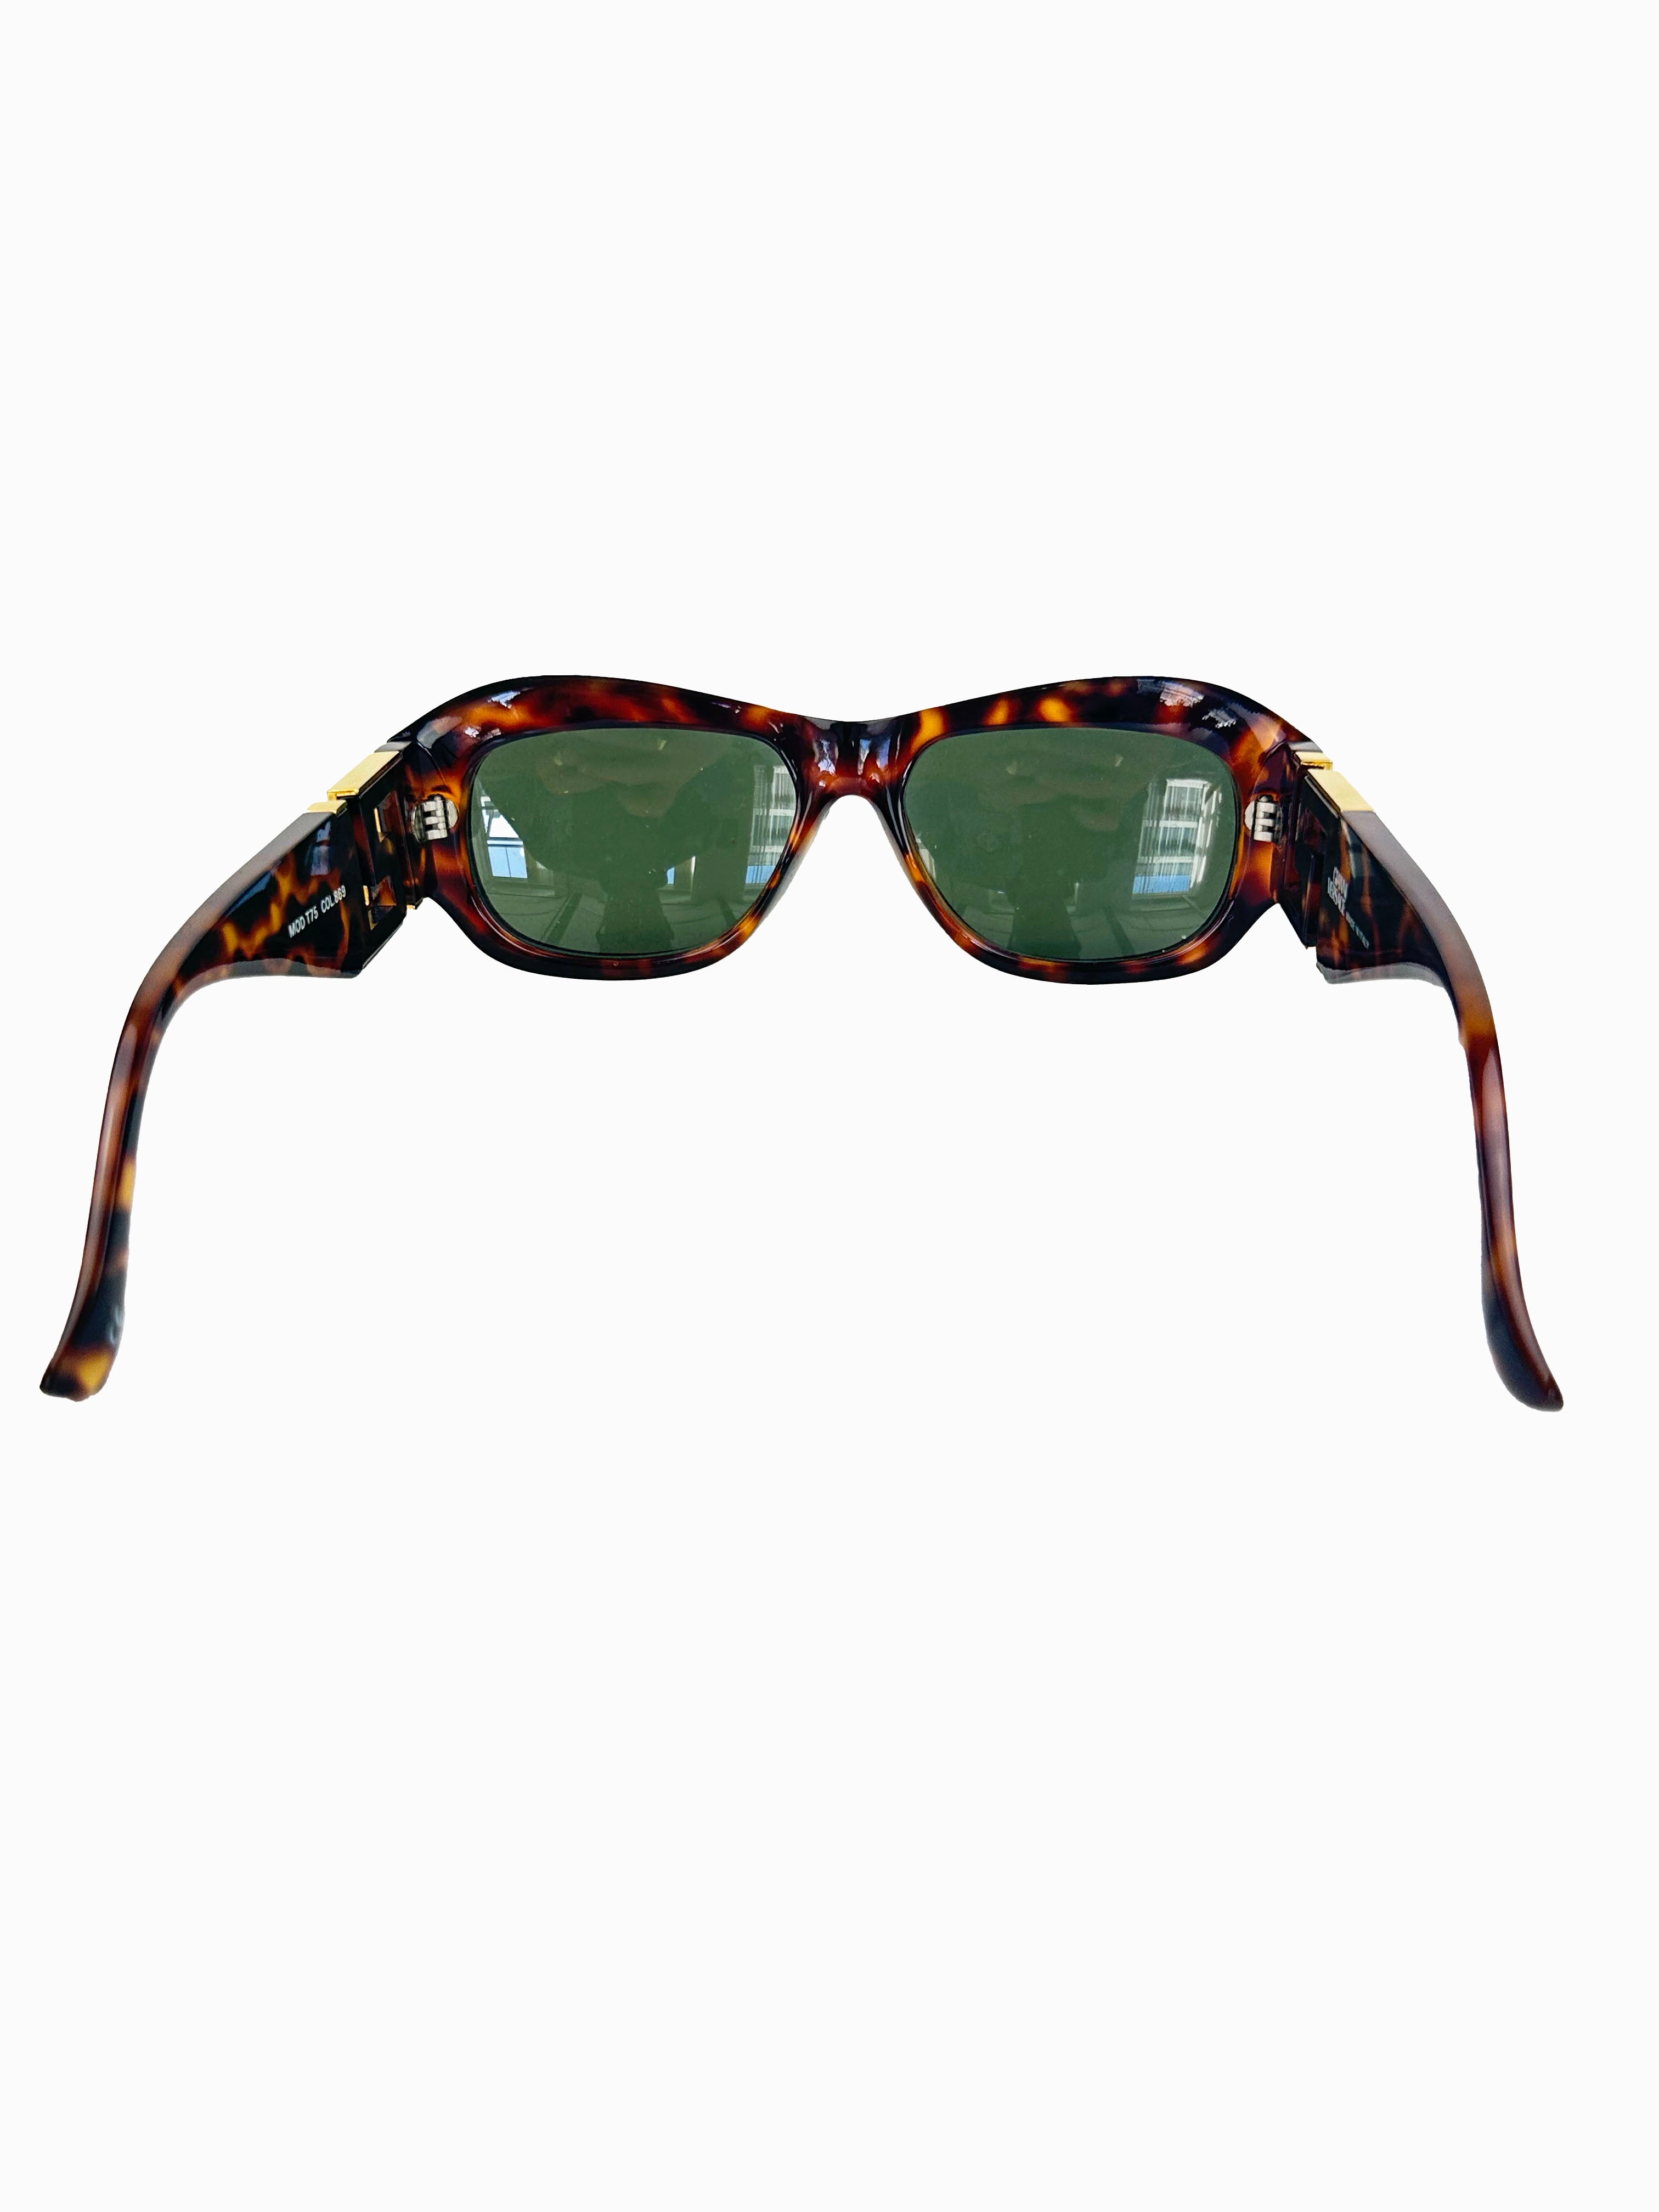 Gianni Versace Sunglasses 90's